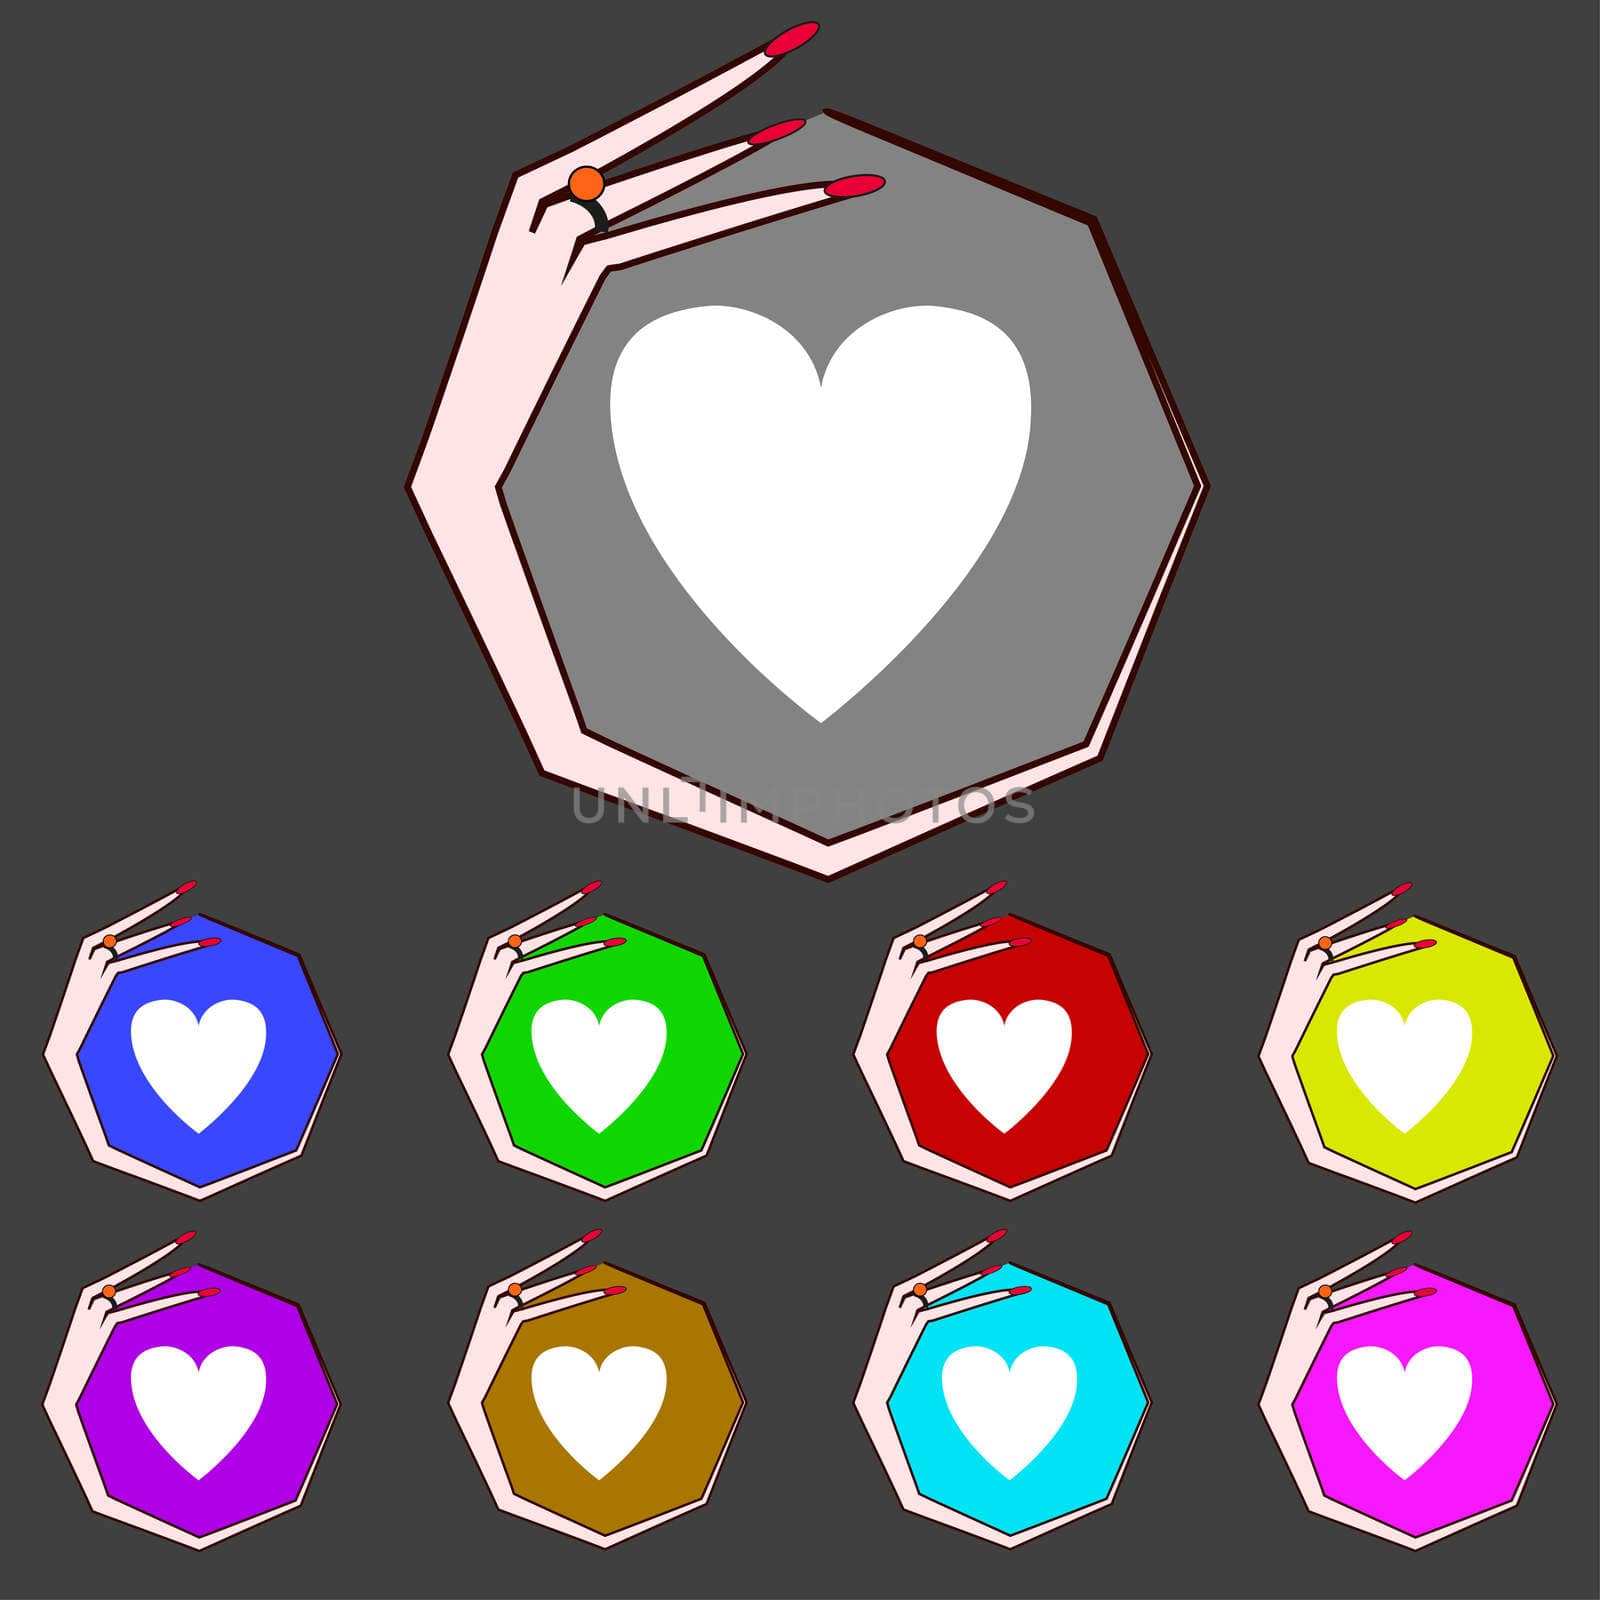 Heart sign icon. Love symbol. Set colur buttons. illustration